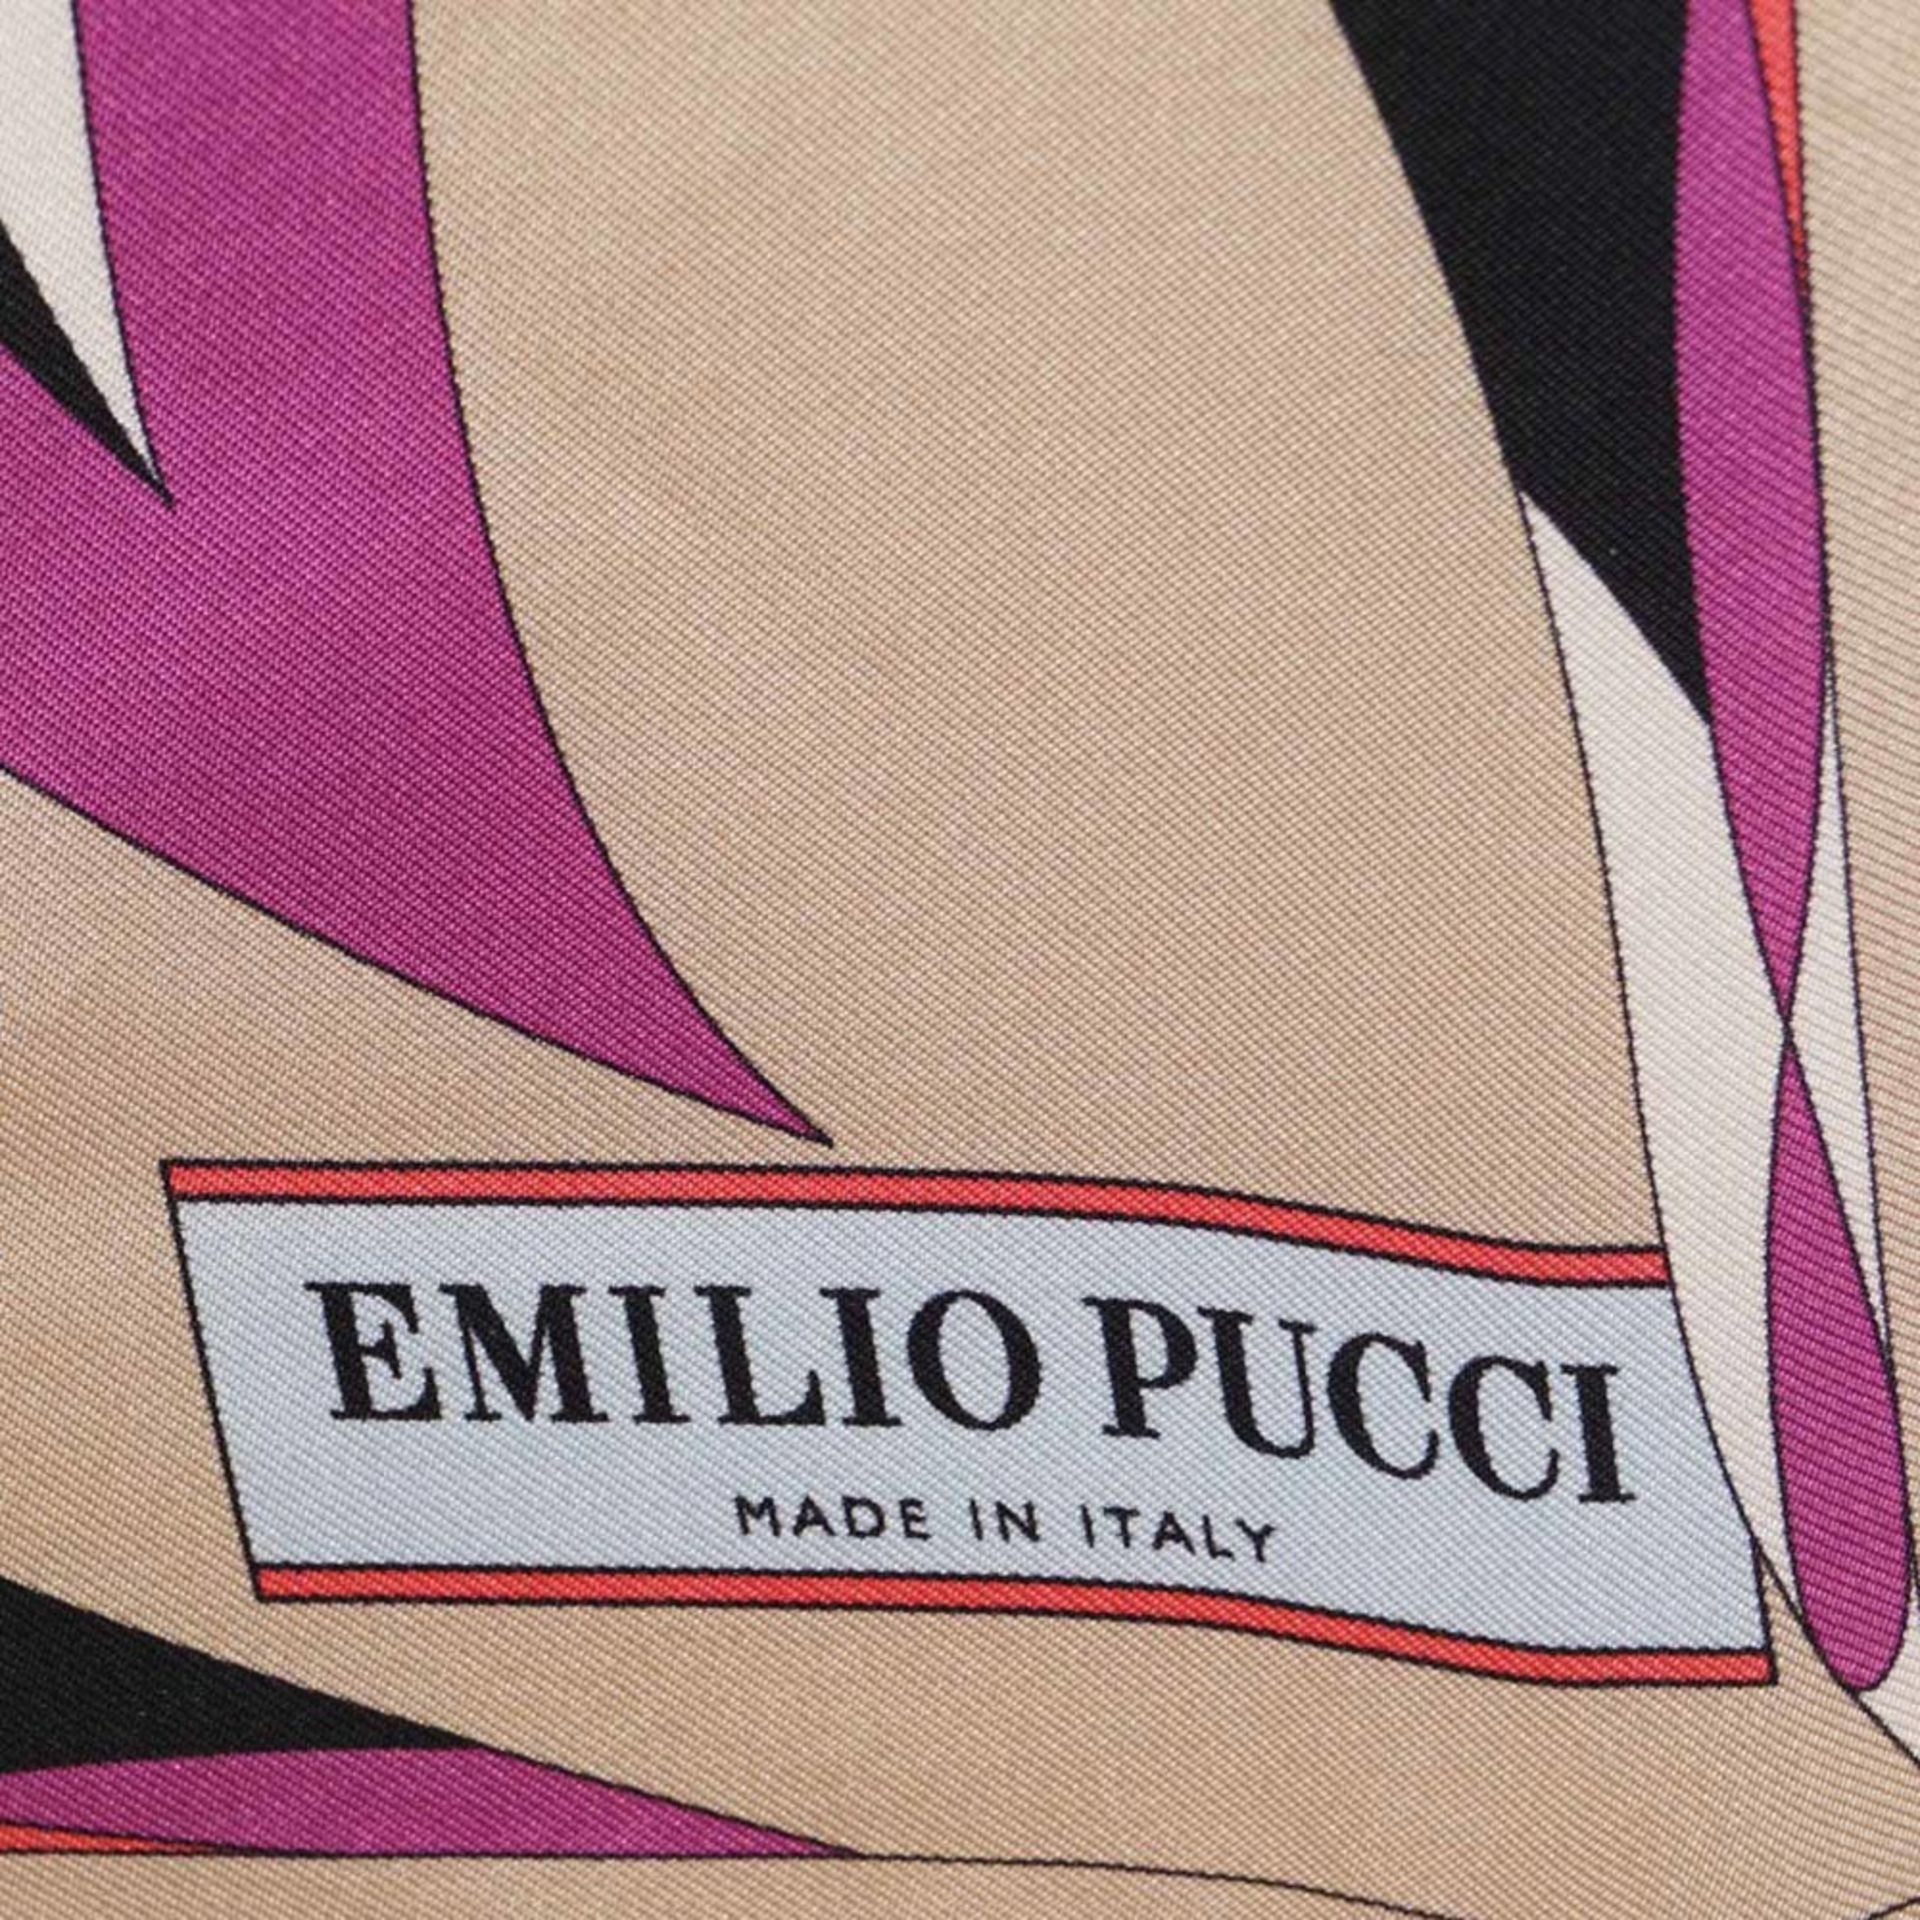 Emilio Pucci, vintage scarf 90x90 cm. - Image 2 of 2